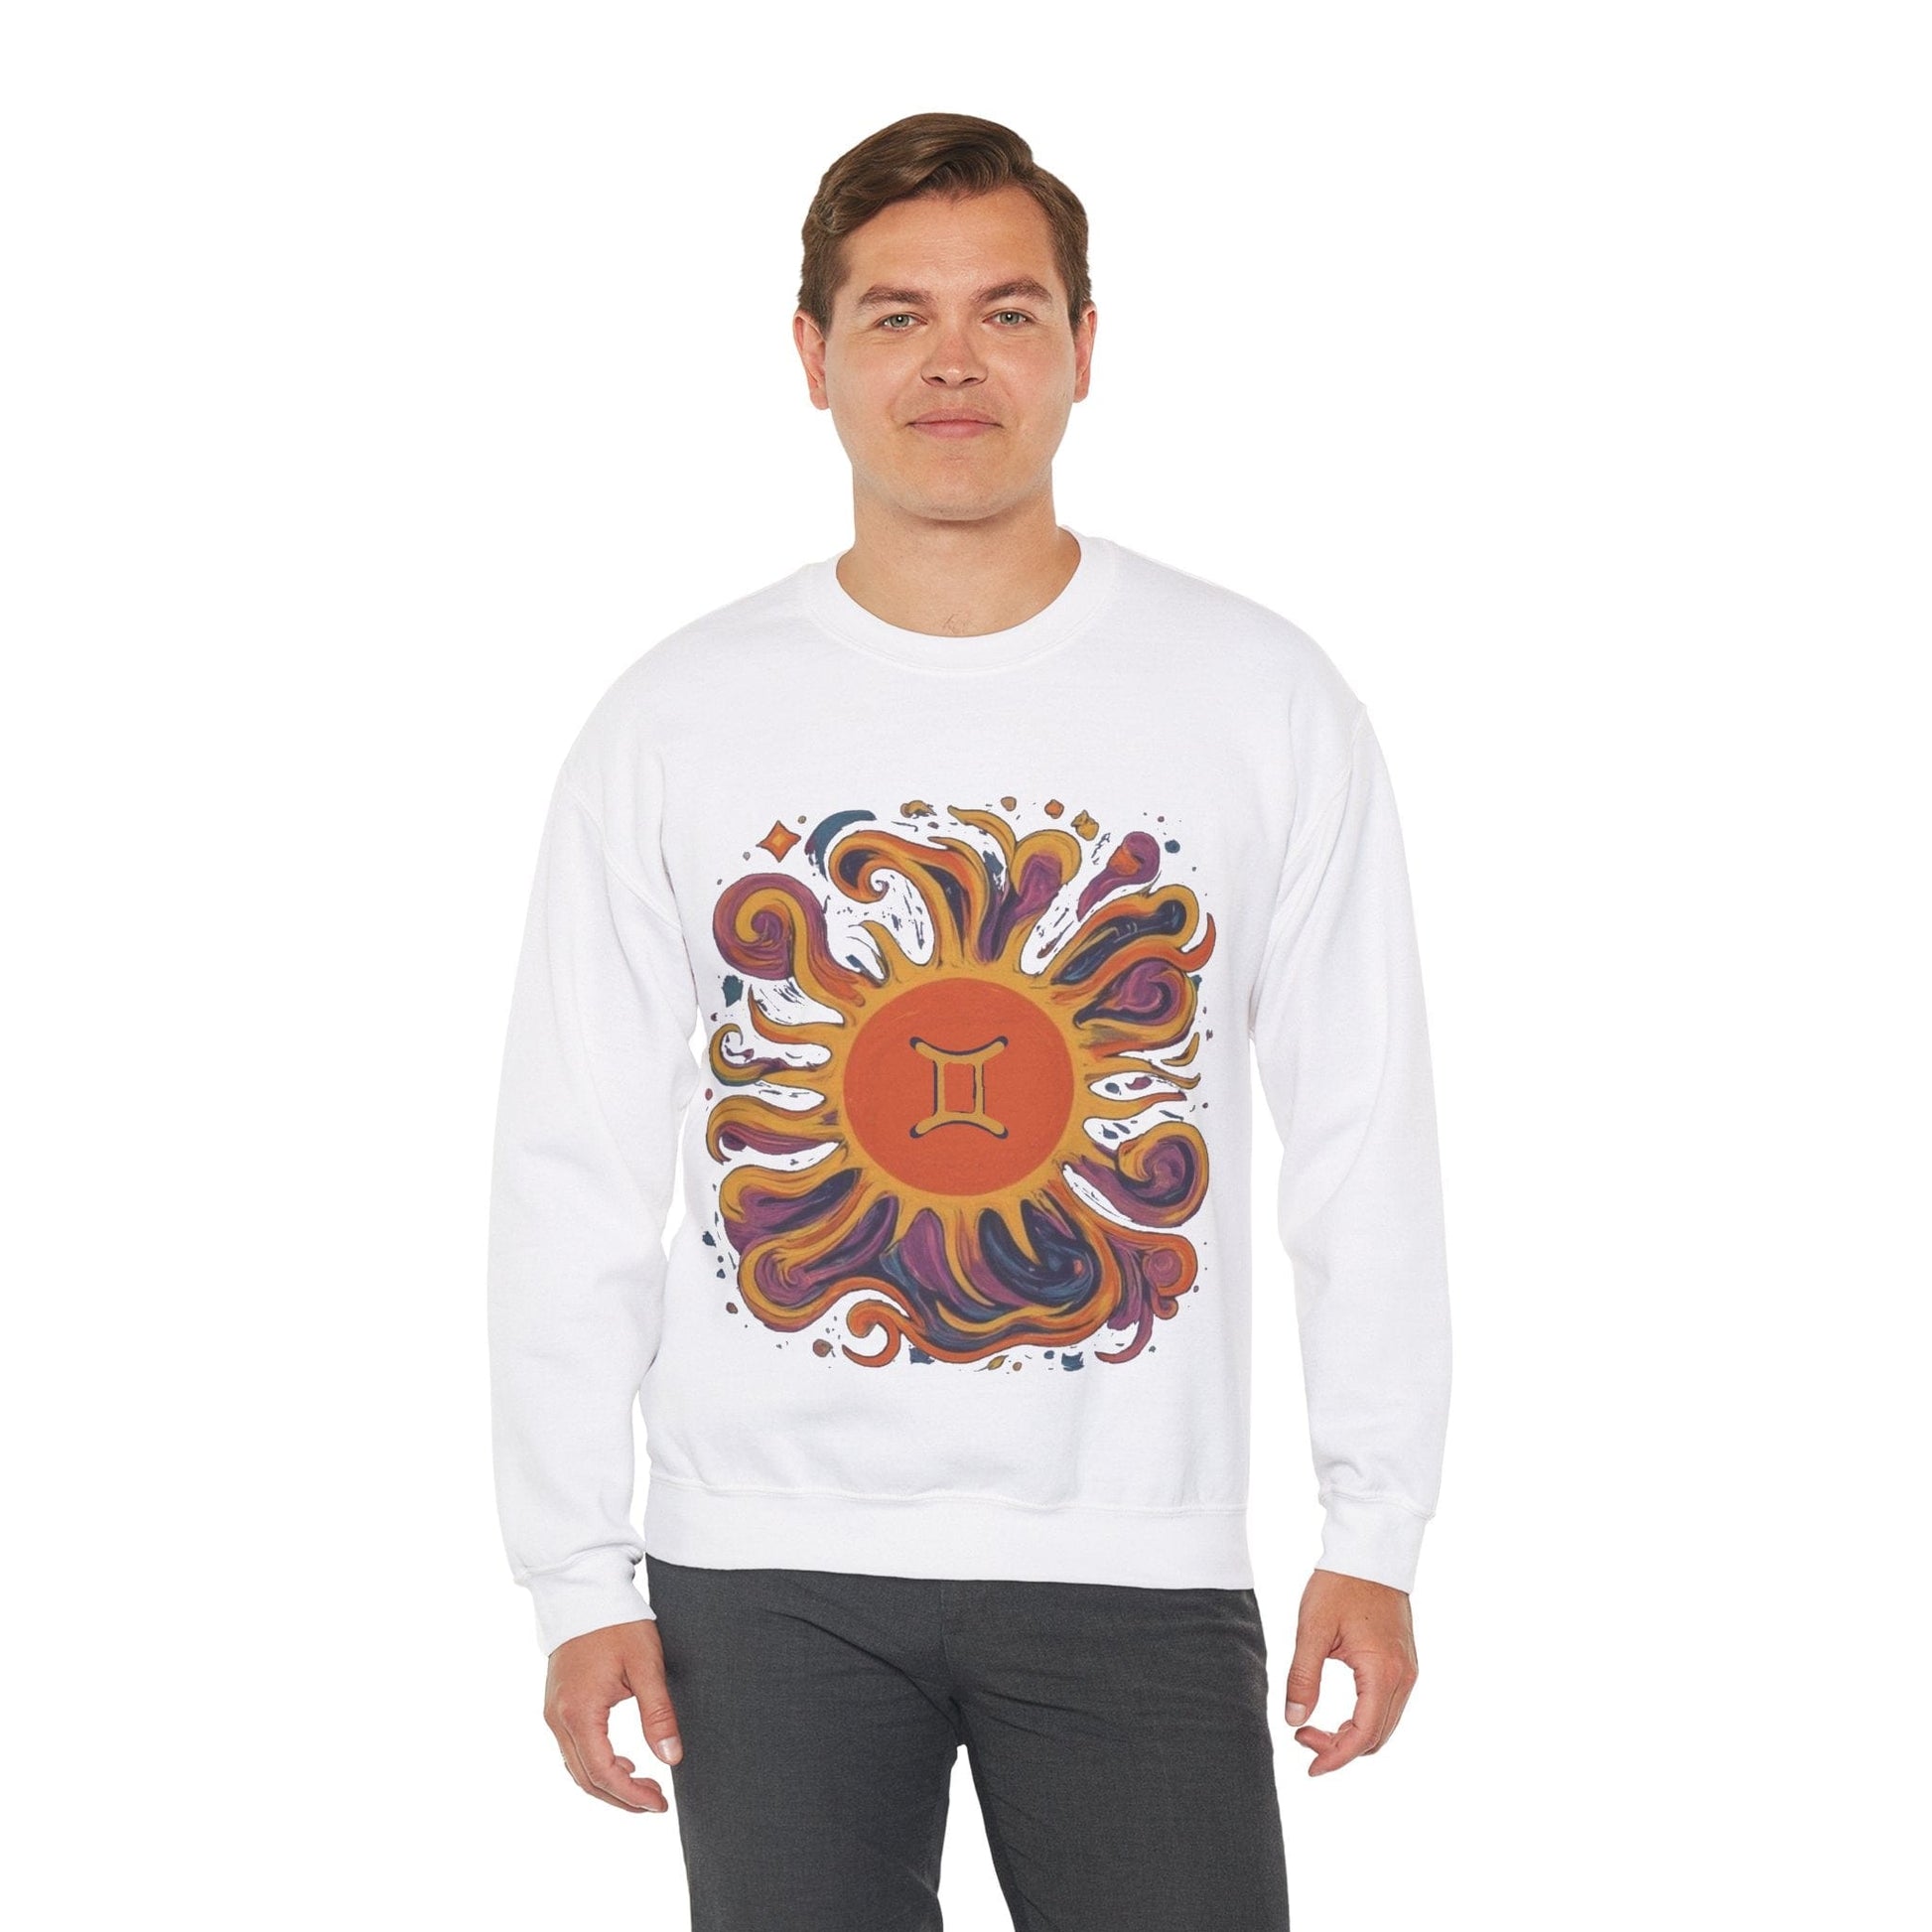 Sweatshirt Gemini Radiant Sun Soft Sweater: Dual Shine for the Twin Sign